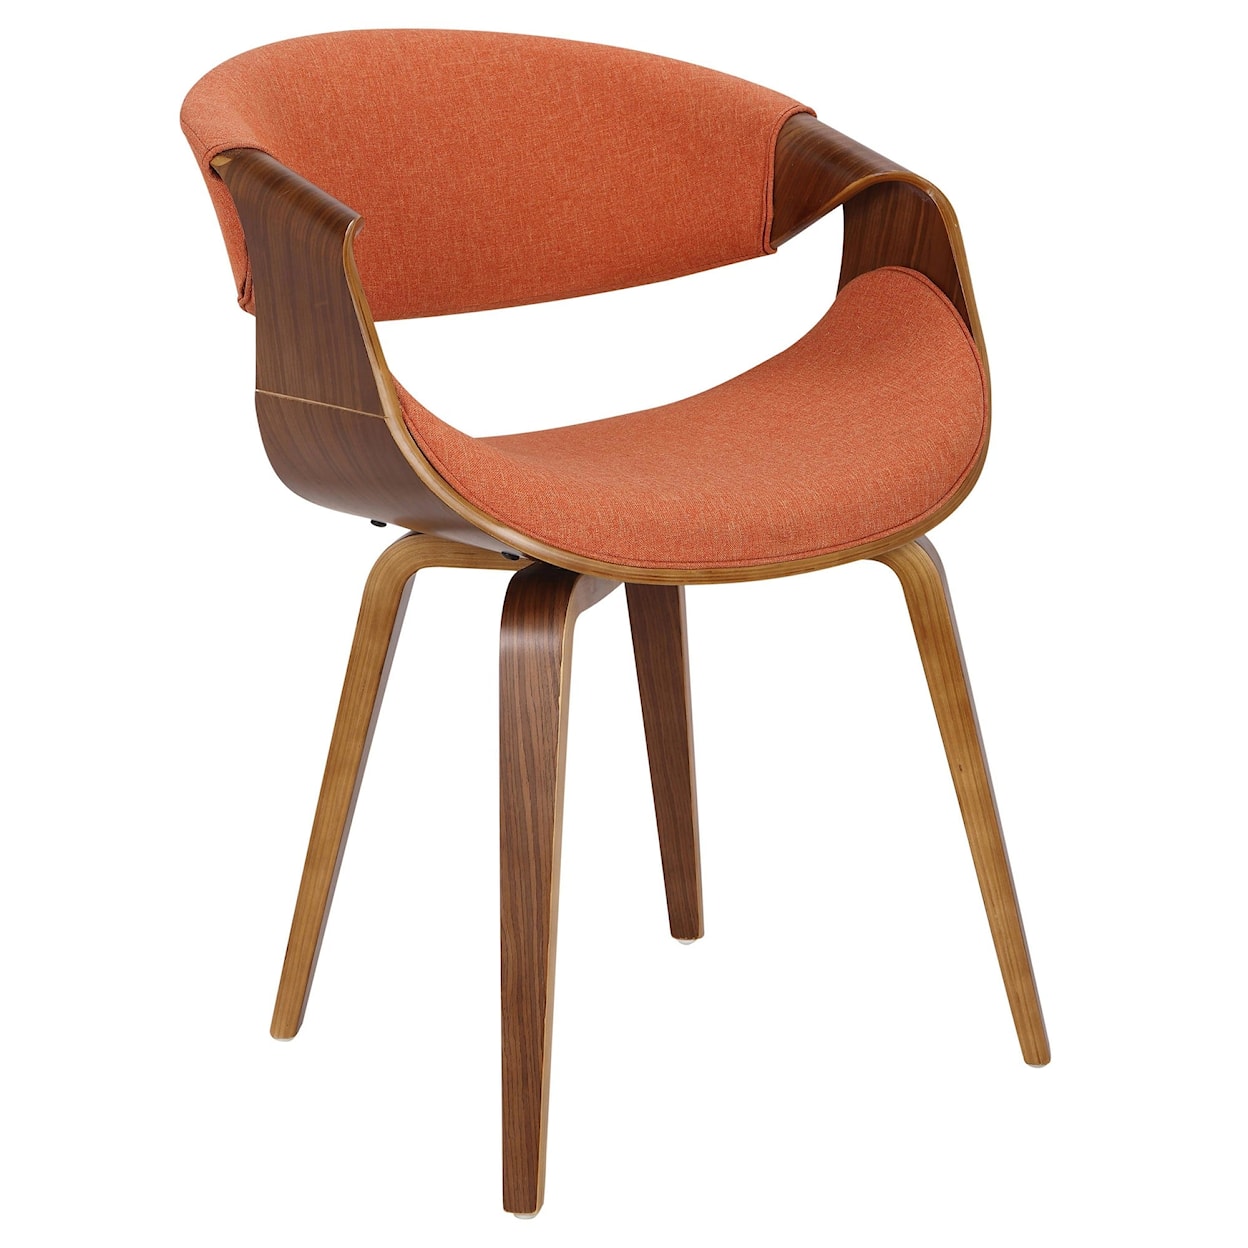 LumiSource Curvo Curvo Chair - Set of 2